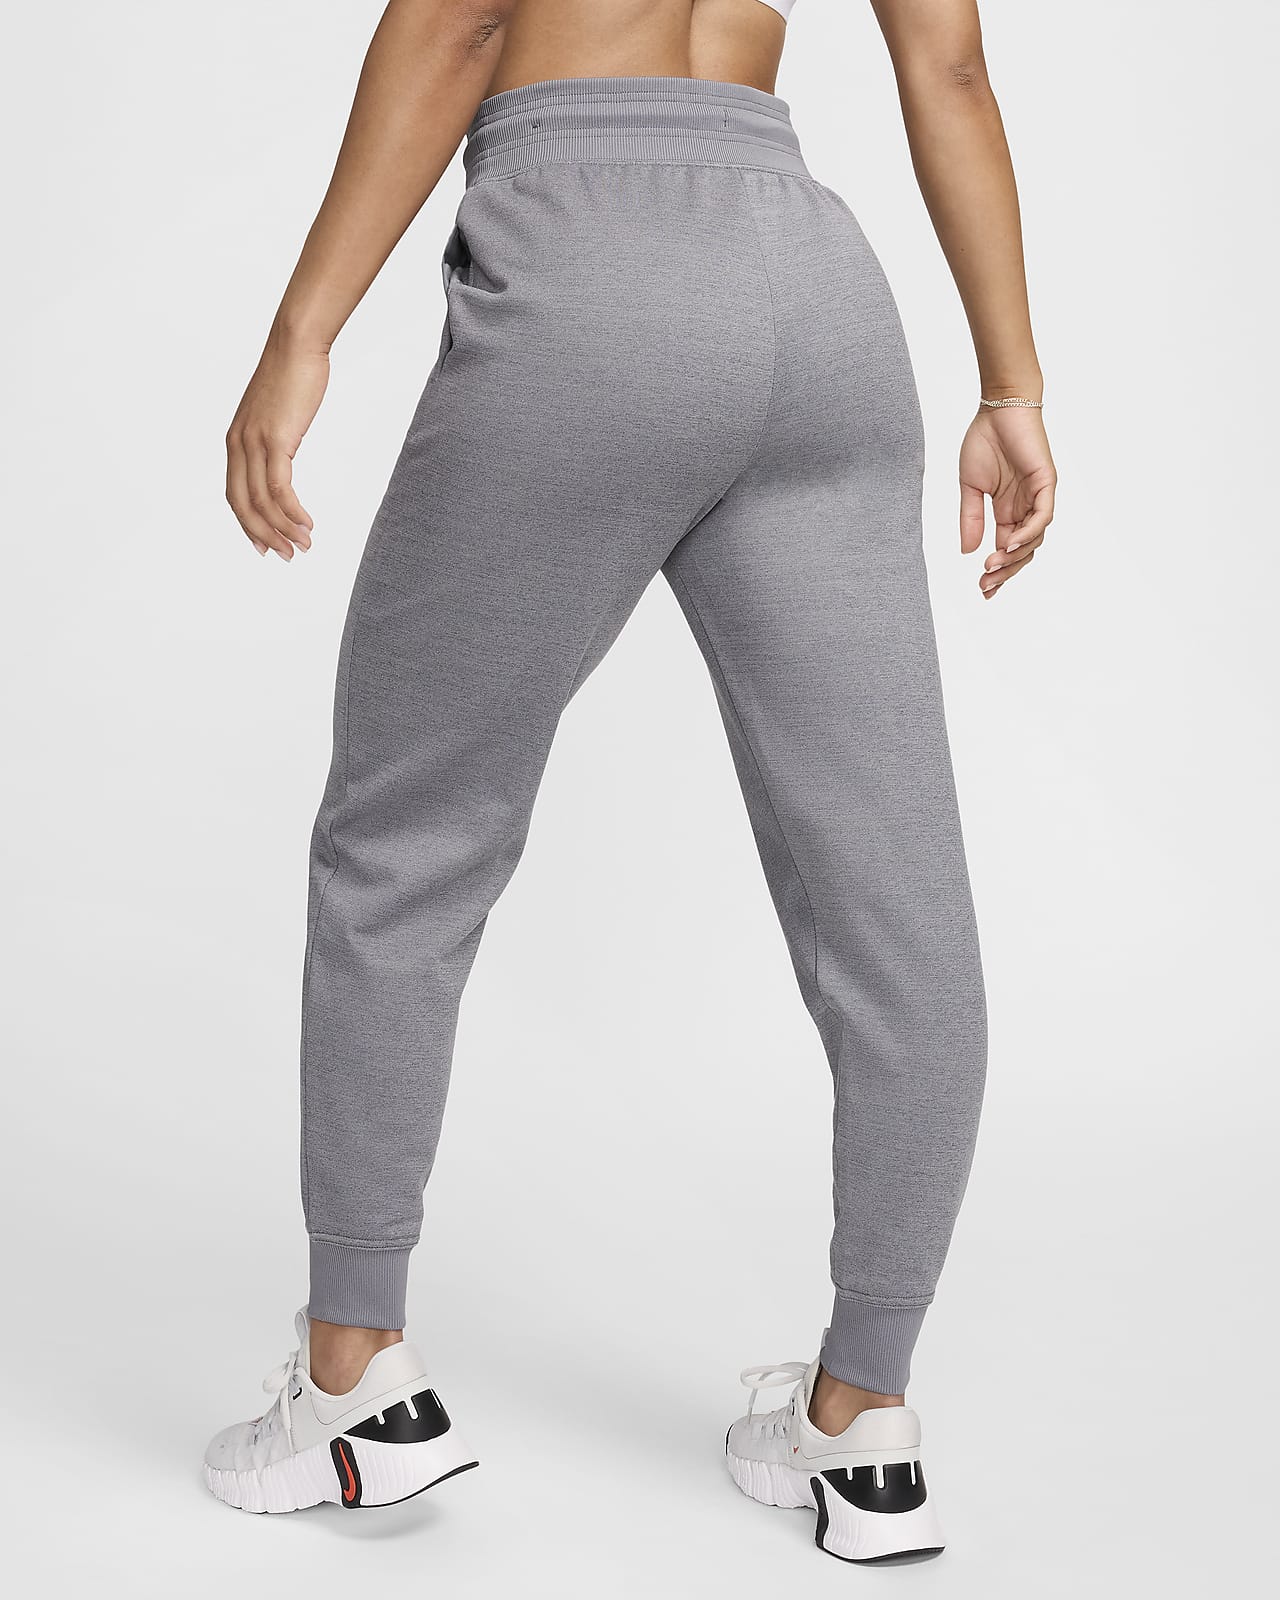 Women's Therma-FIT One High-Waisted 7/8 Leggings Nike Размер: L купить от  7675 рублей в интернет-магазине MALL